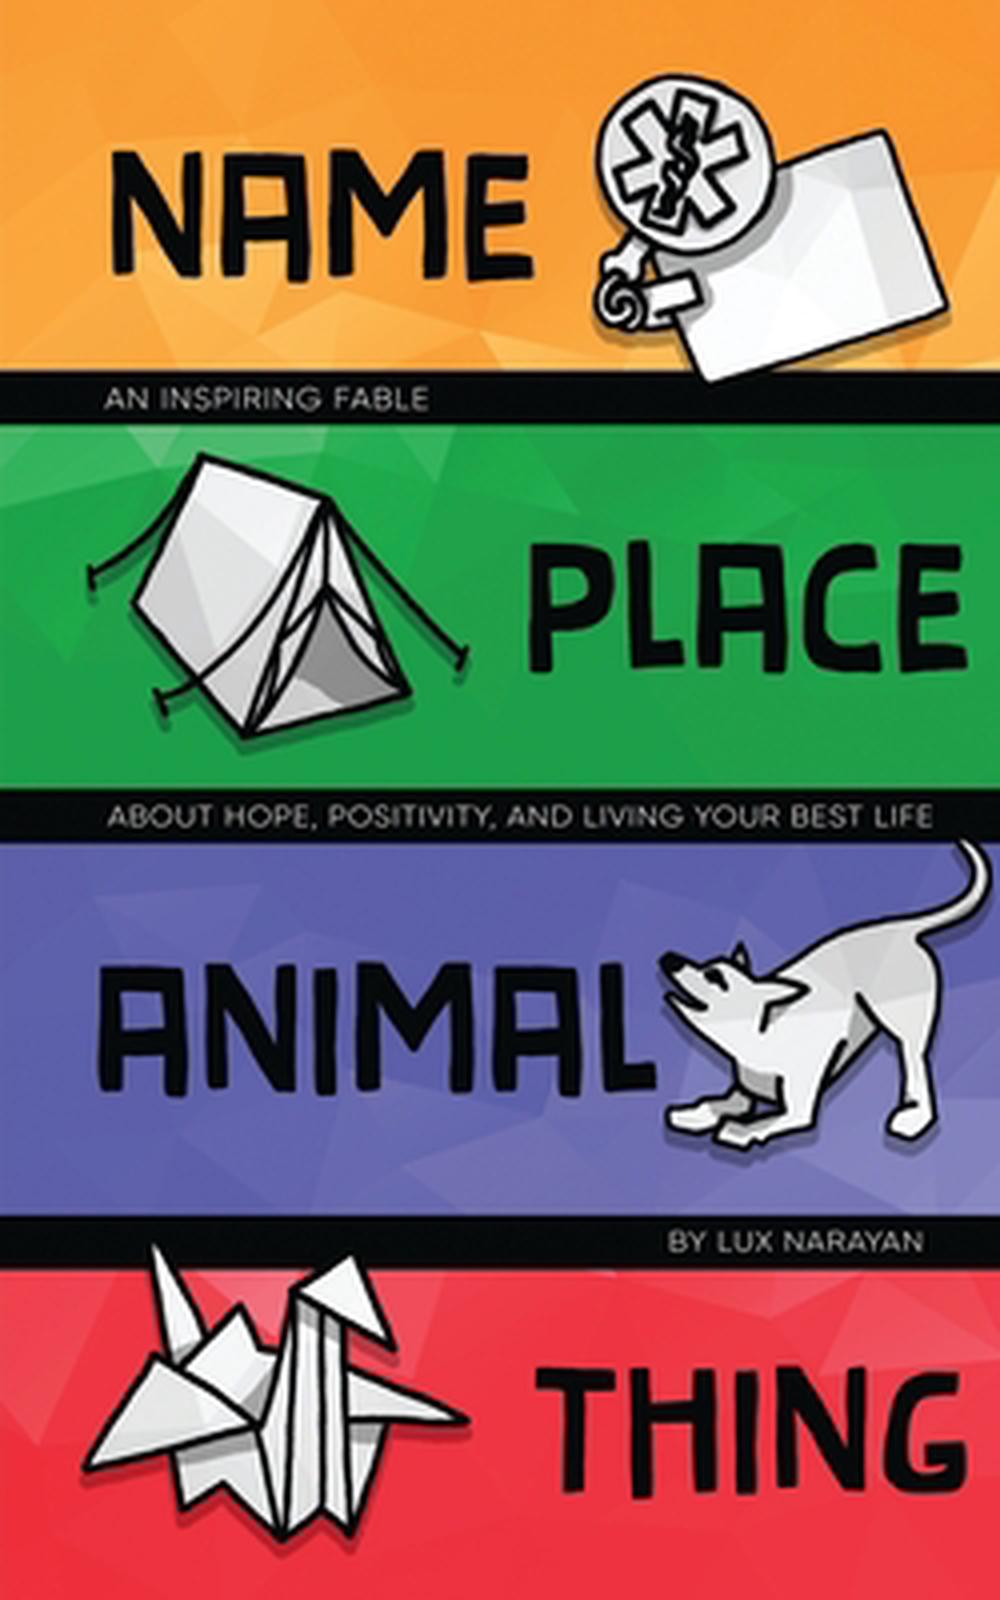 Name, Place, Animal, Thing by Lux Narayan (English) Paperback Book Free